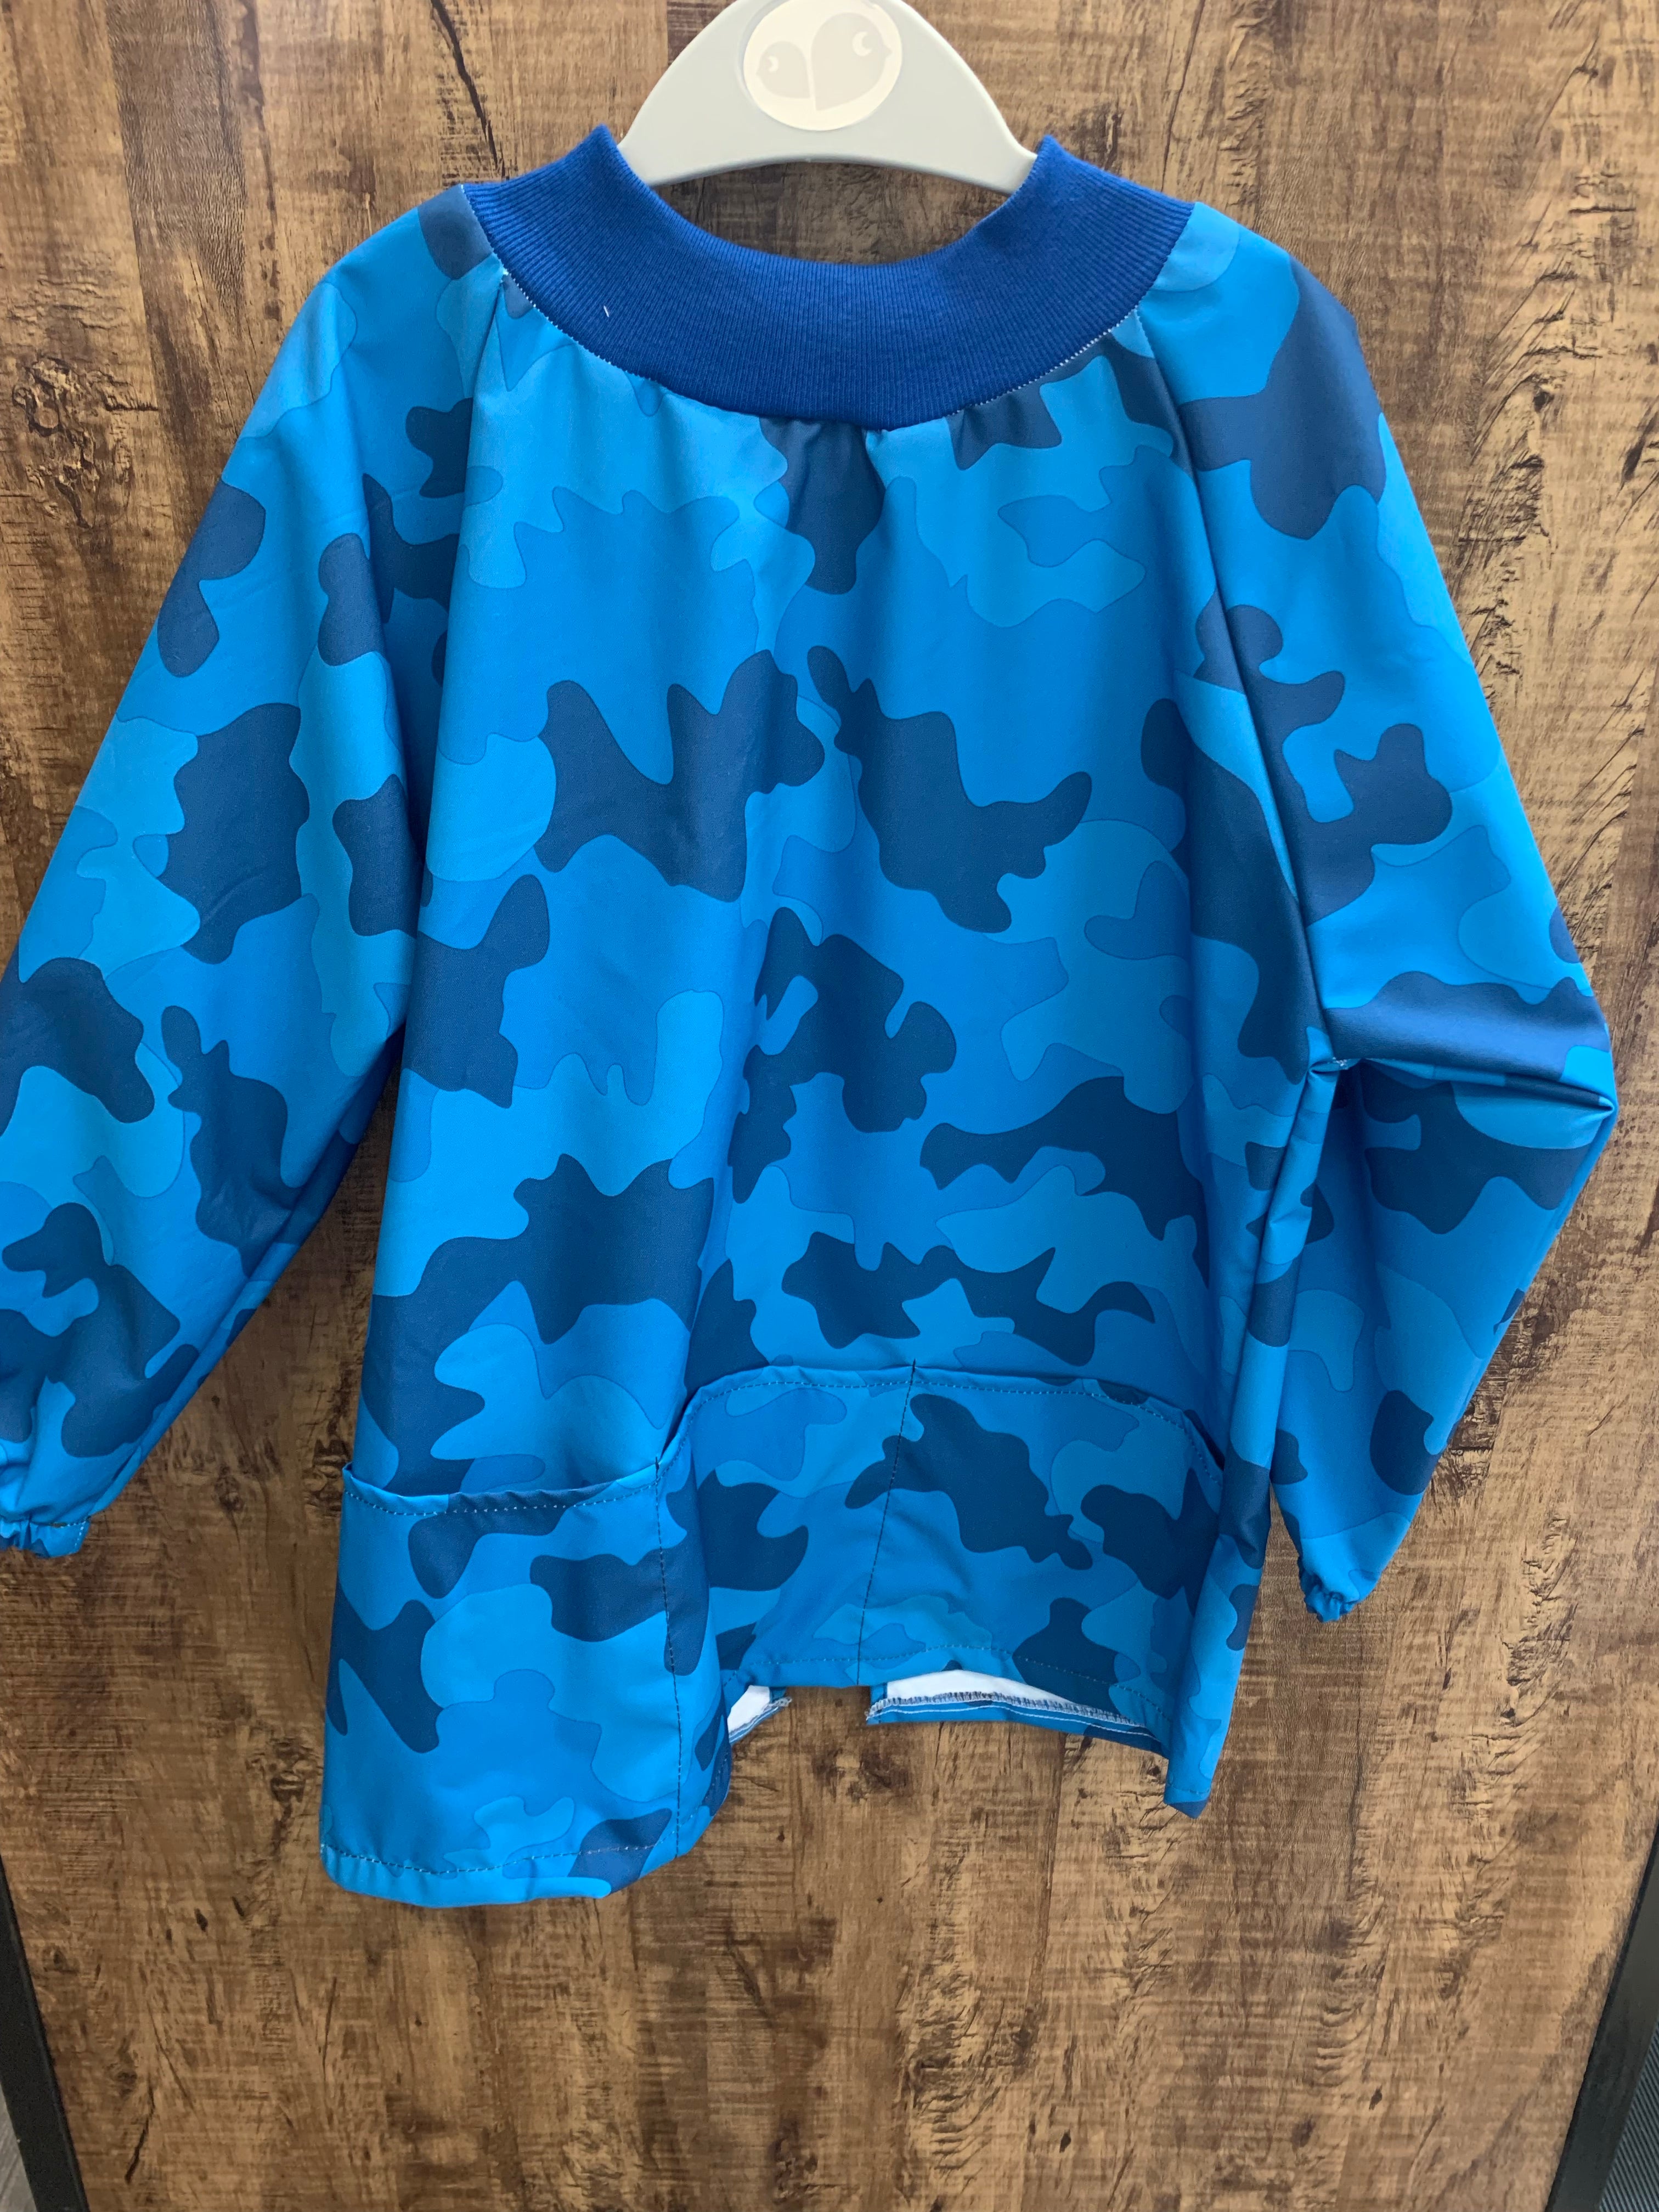 Perlimpinpin - Couvre-tout camouflage bleu